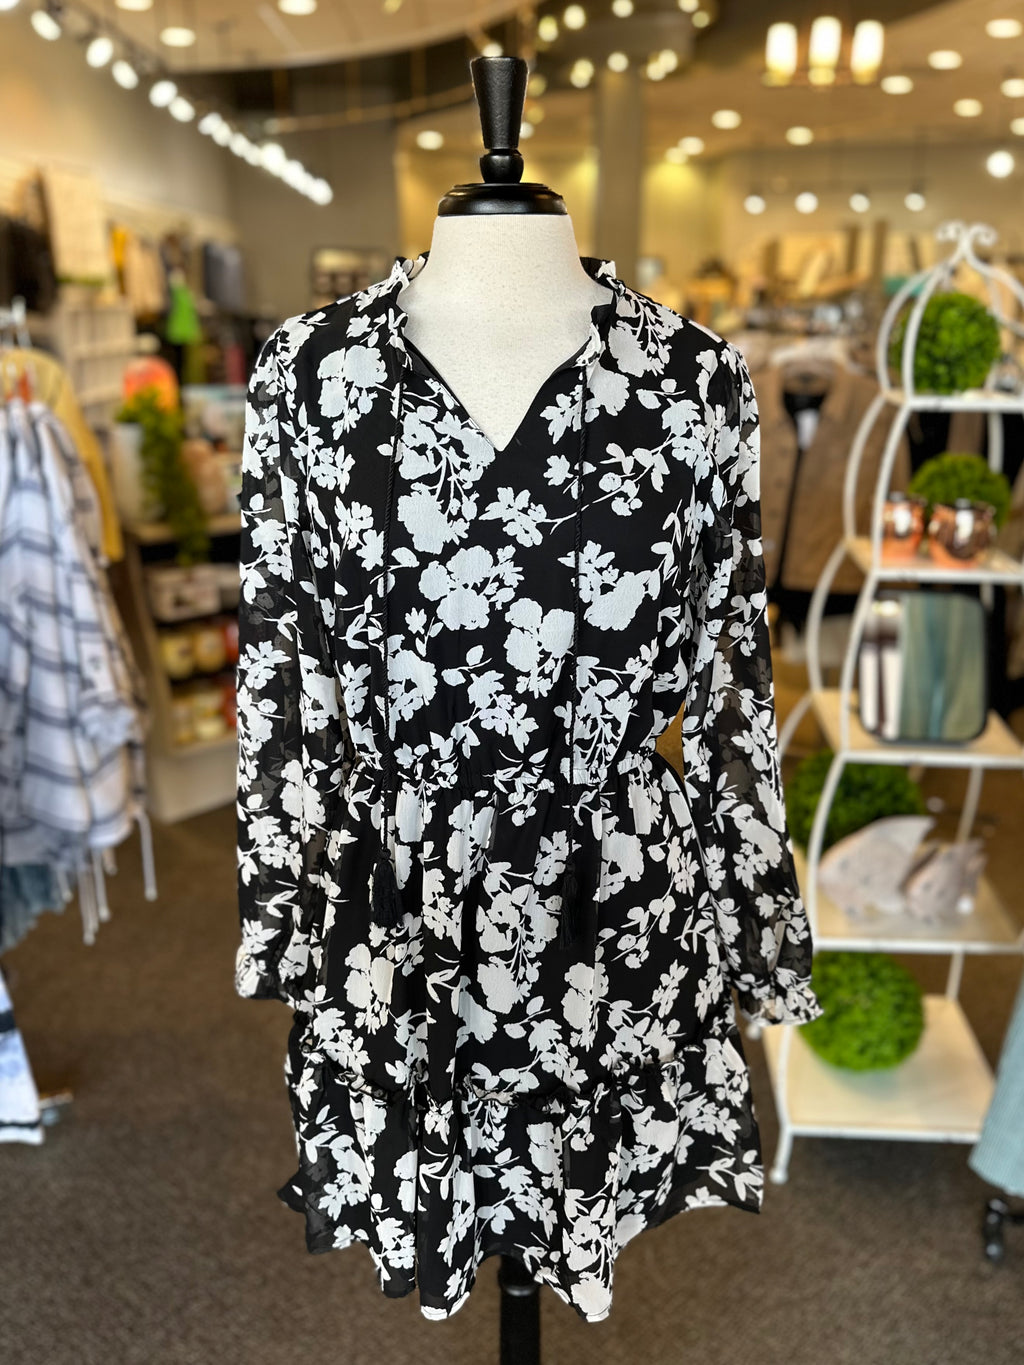 Keren Hart Long Sleeve Floral Print Dress with V-Neck